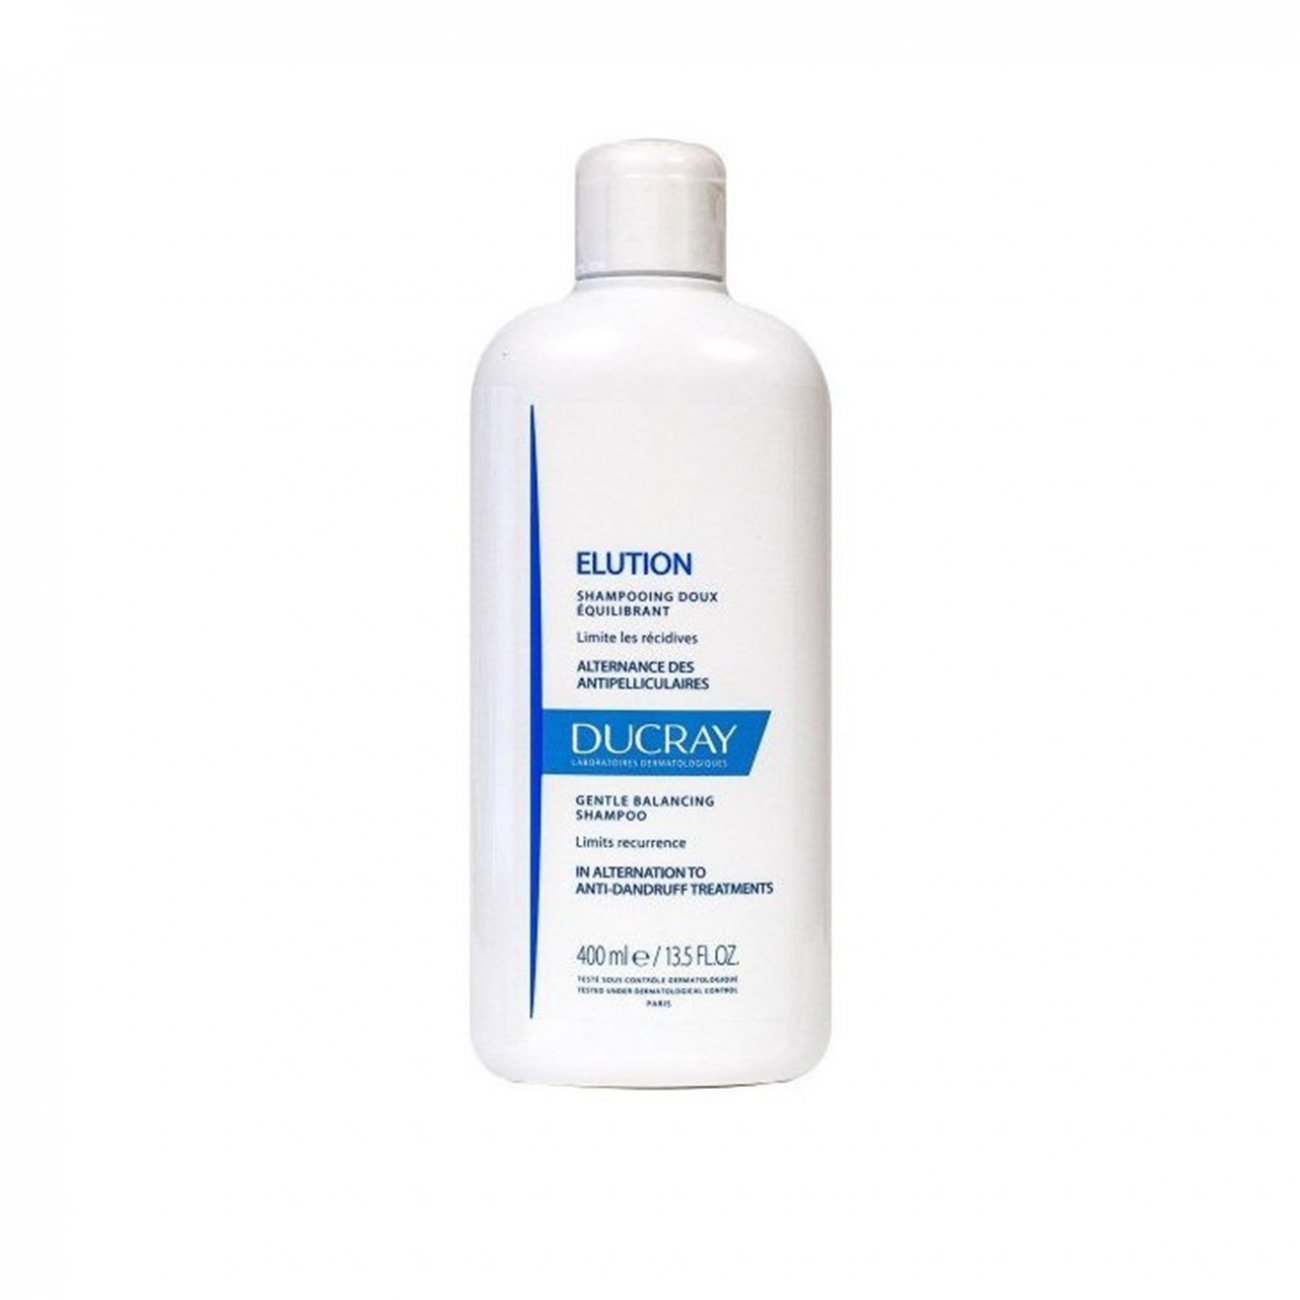 Buy Ducray Elution Gentle Balancing Shampoo (13.53fl oz) · USA